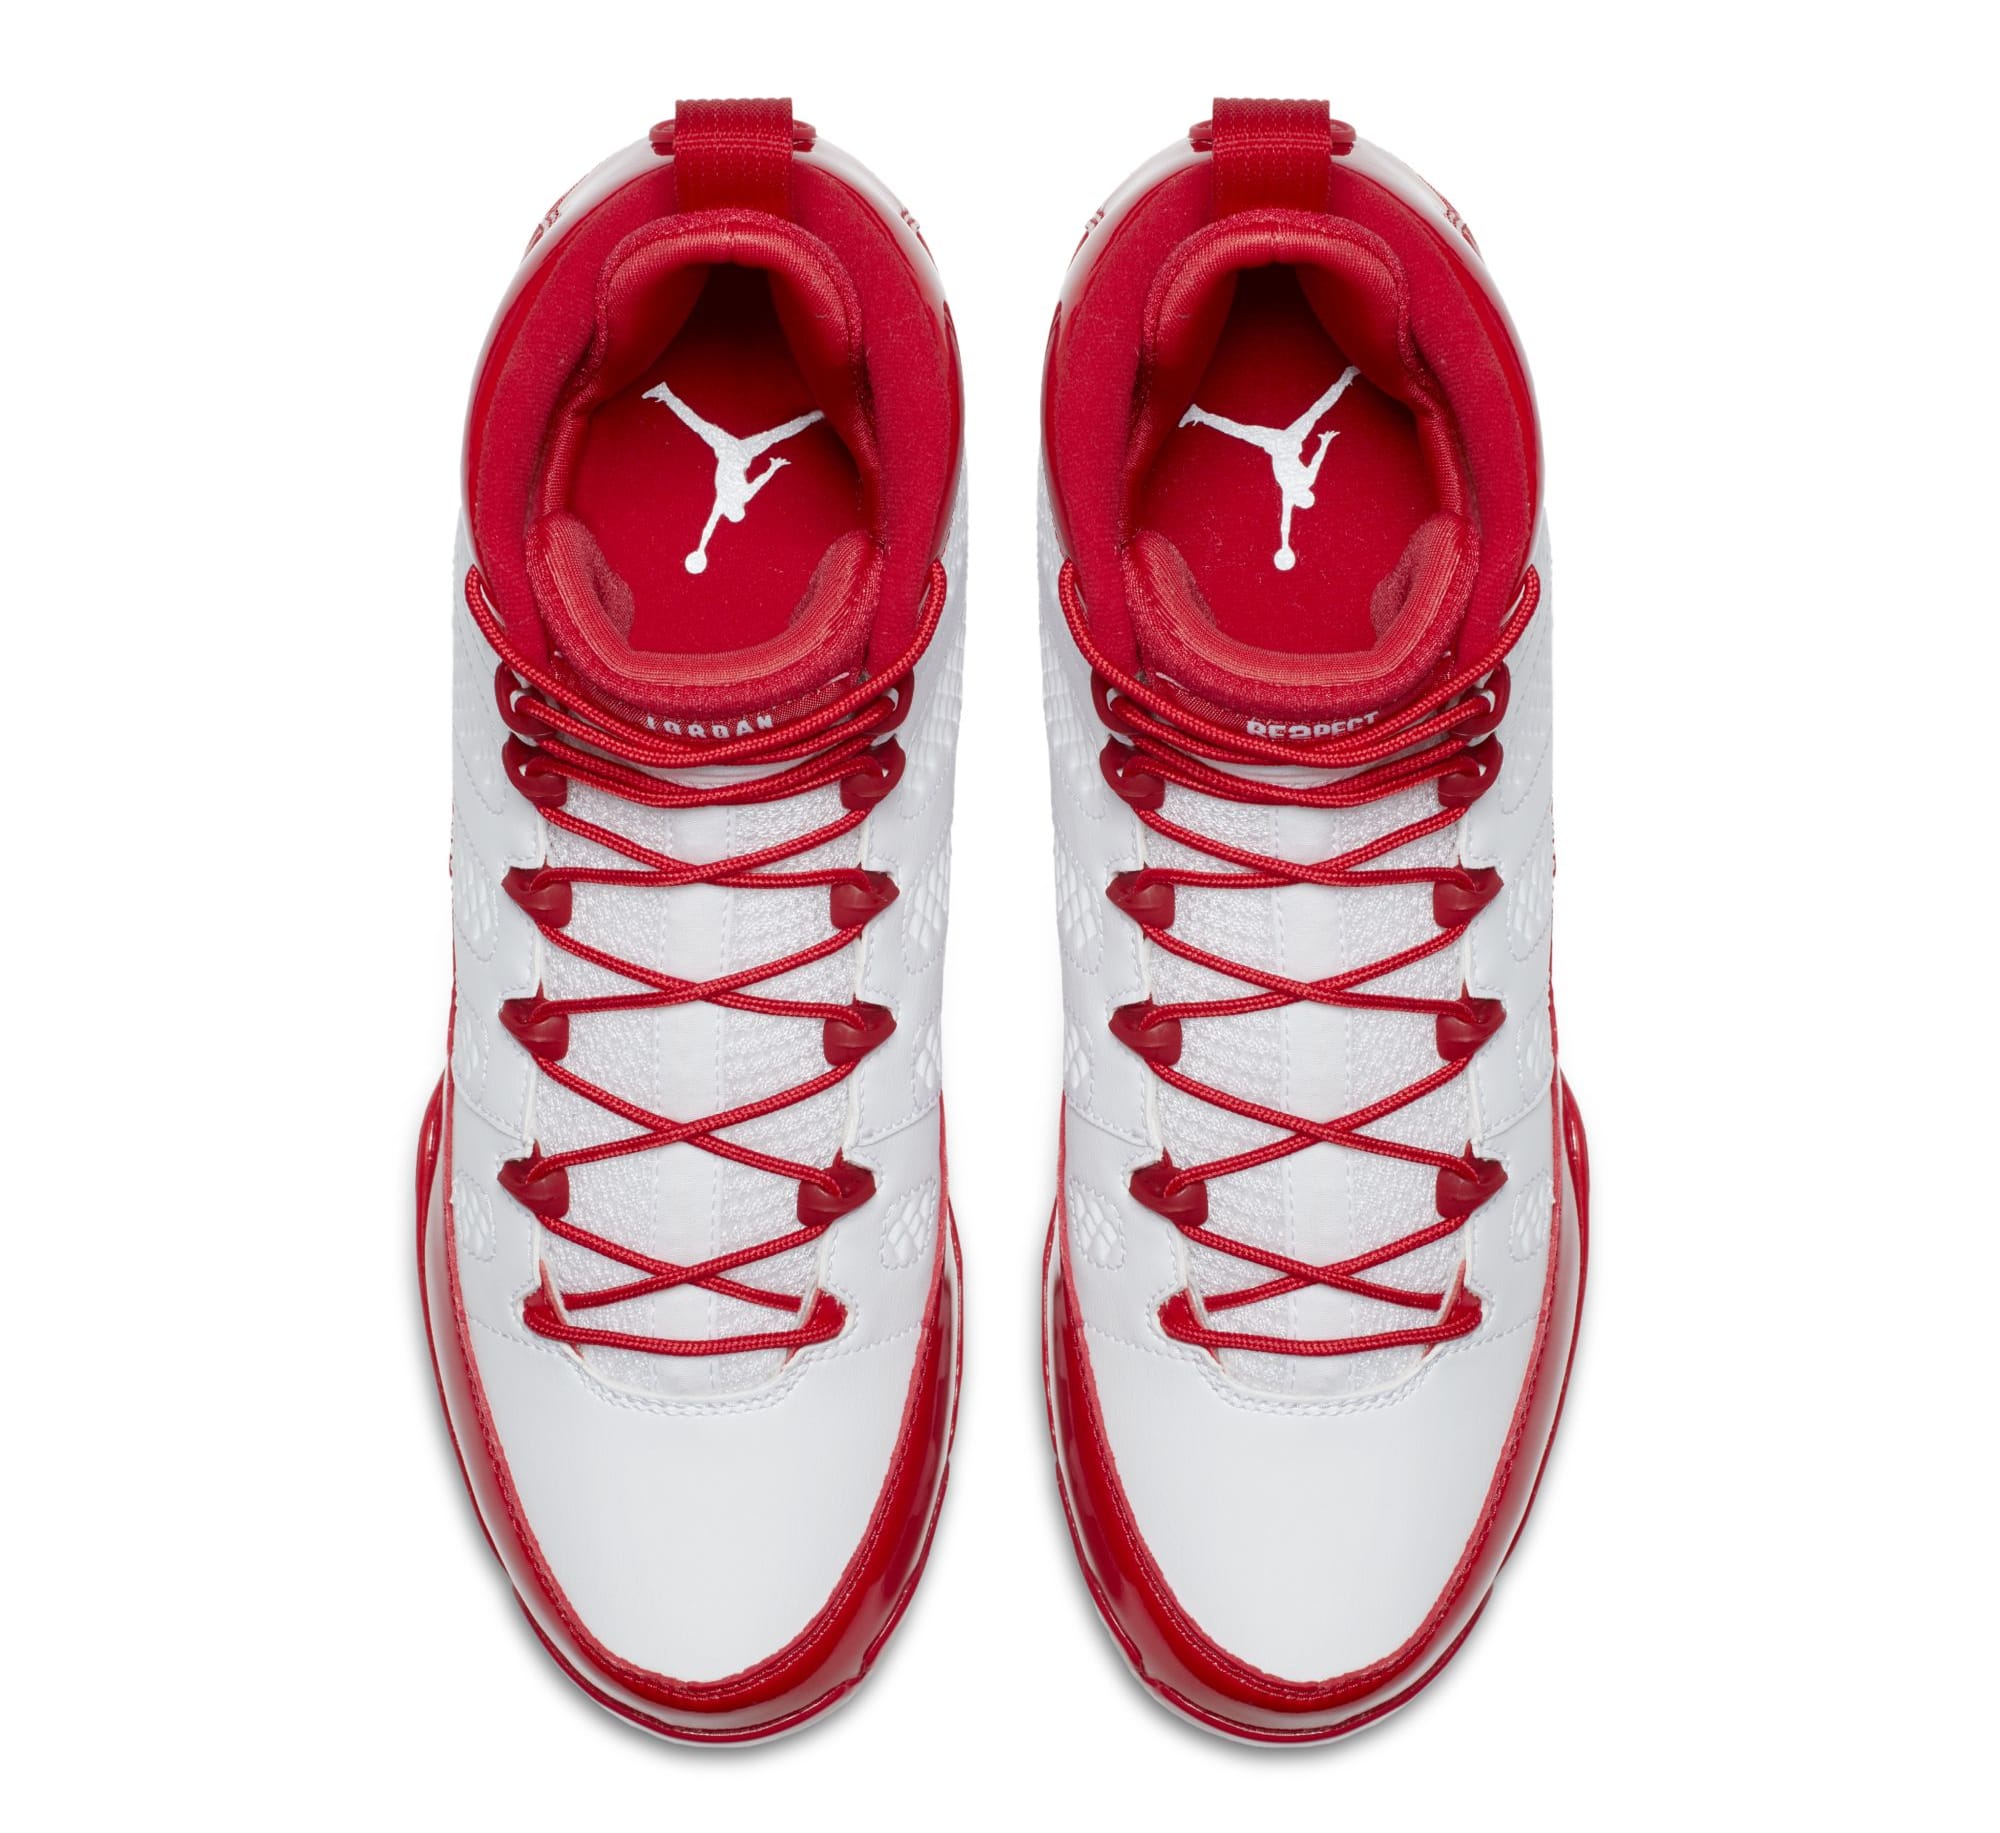 Air Jordan 9 IX MCS Baseball Cleats Red Top